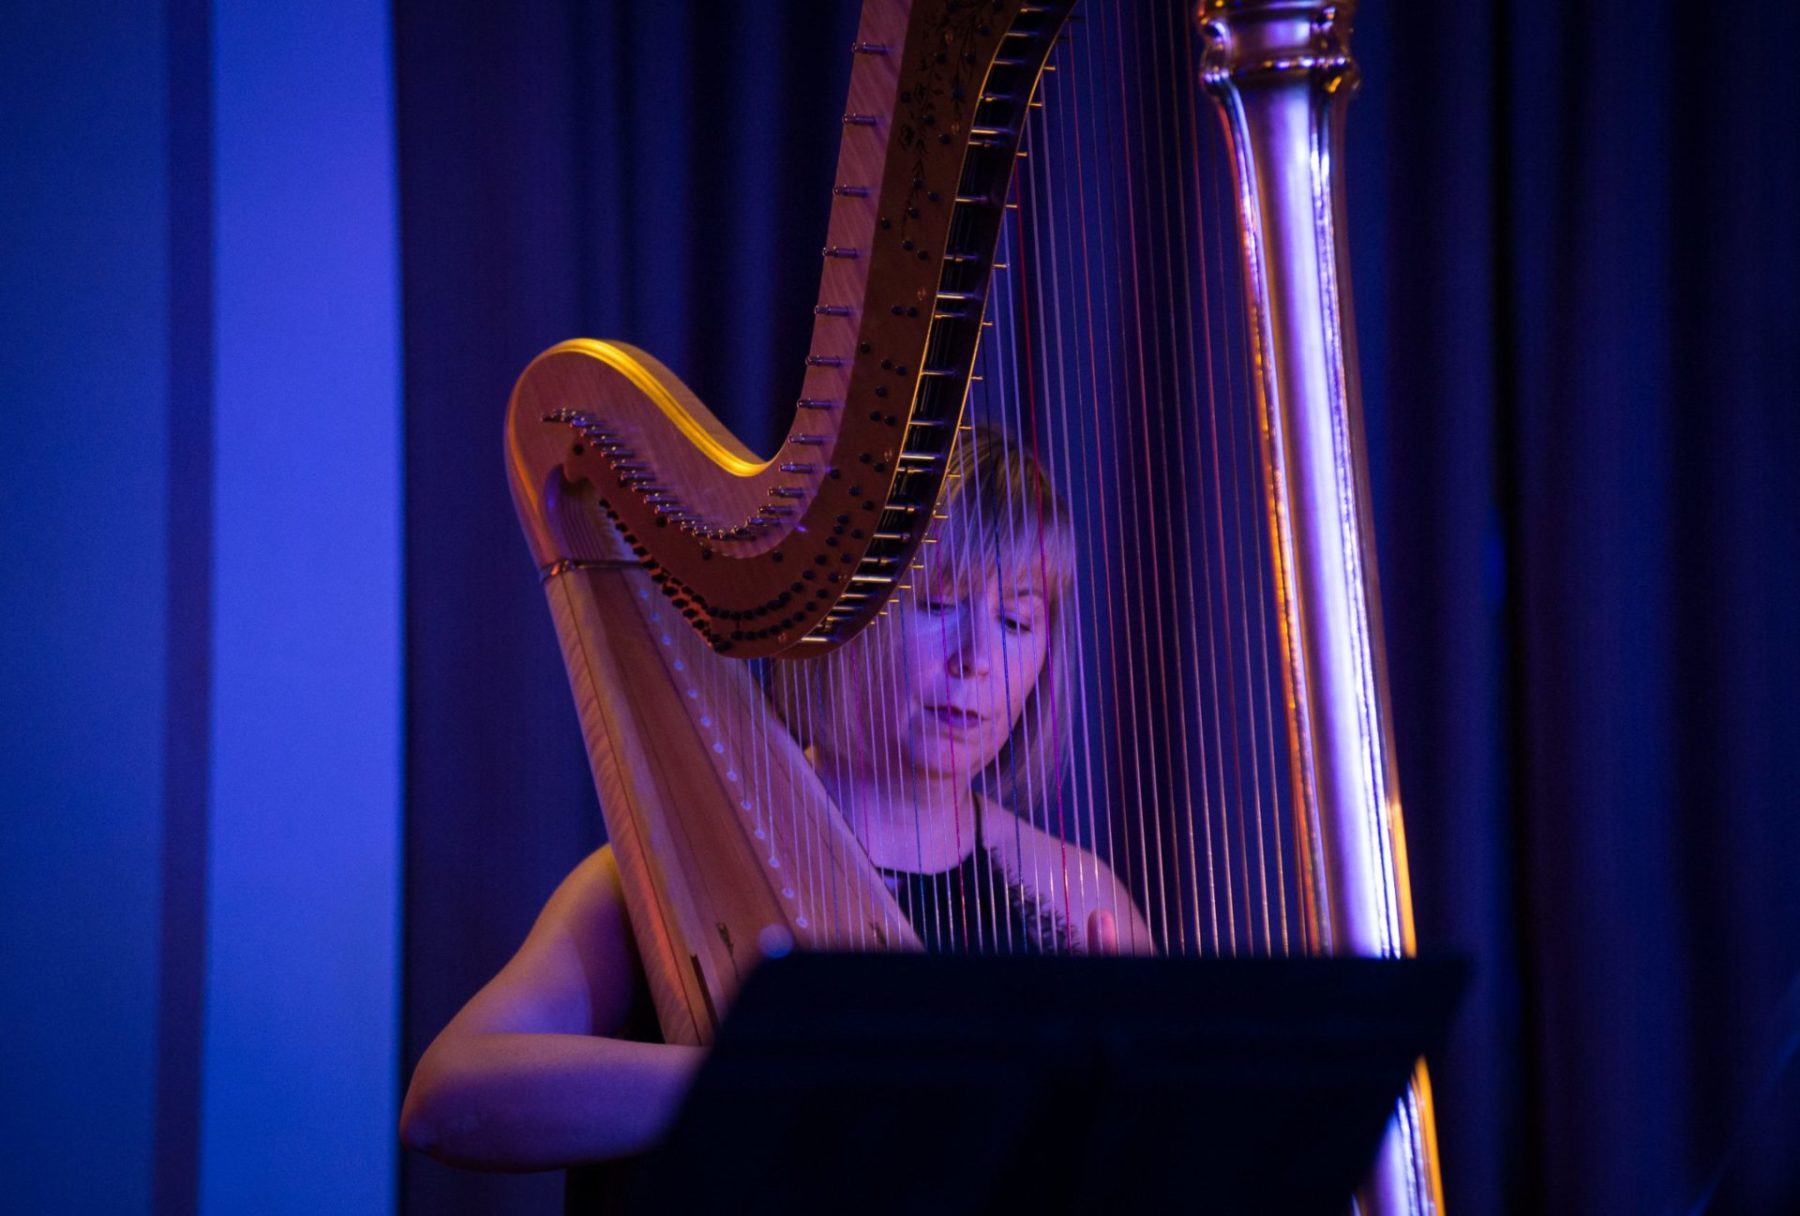 Heidi Krutzen, Music for the Winter Solstice 2014